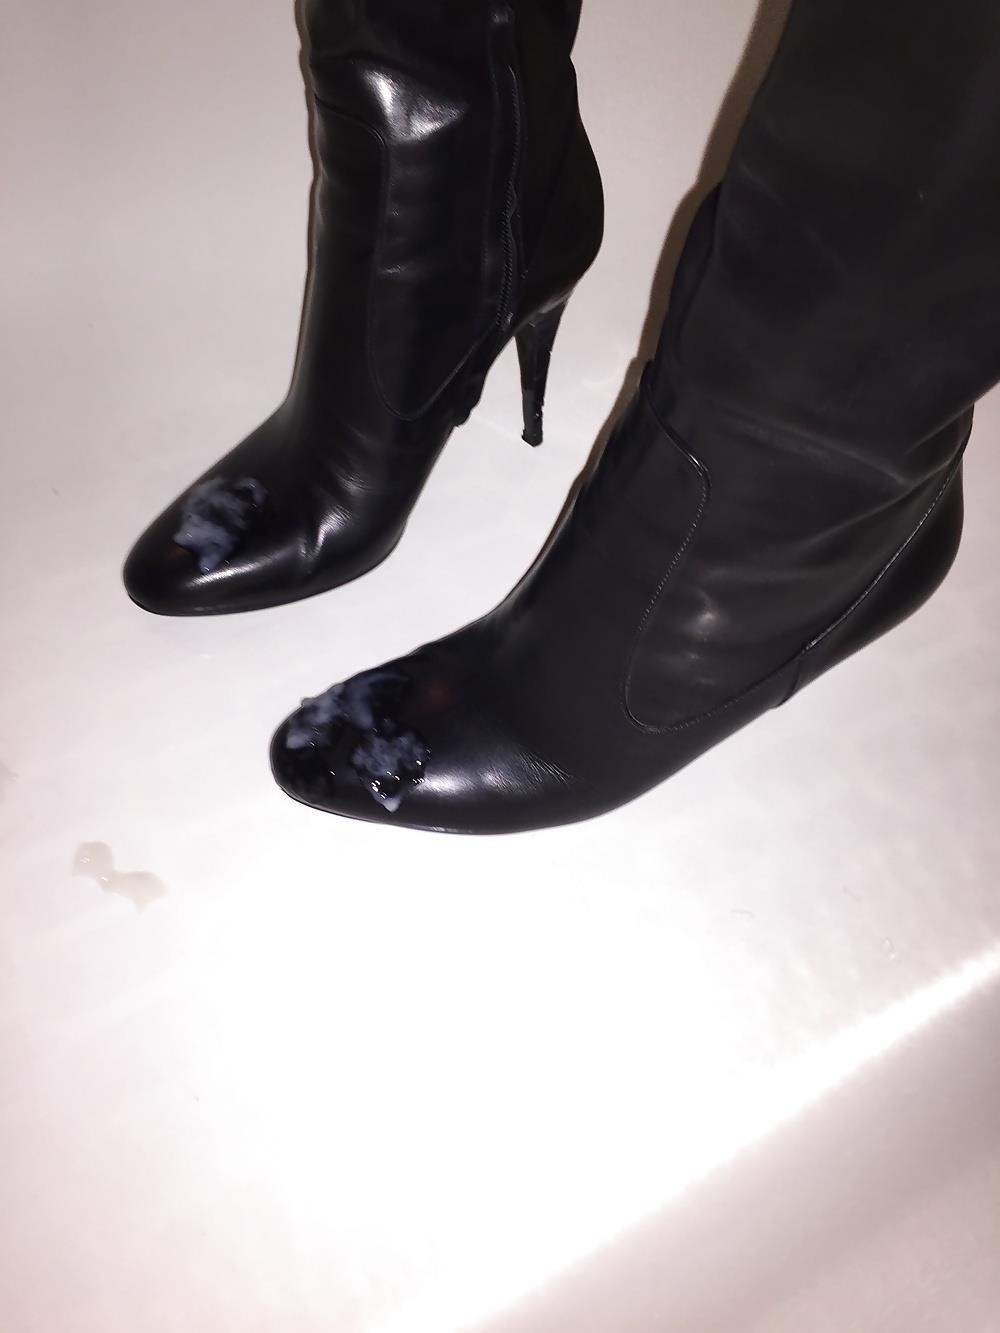 Black burberry rain boots-9677